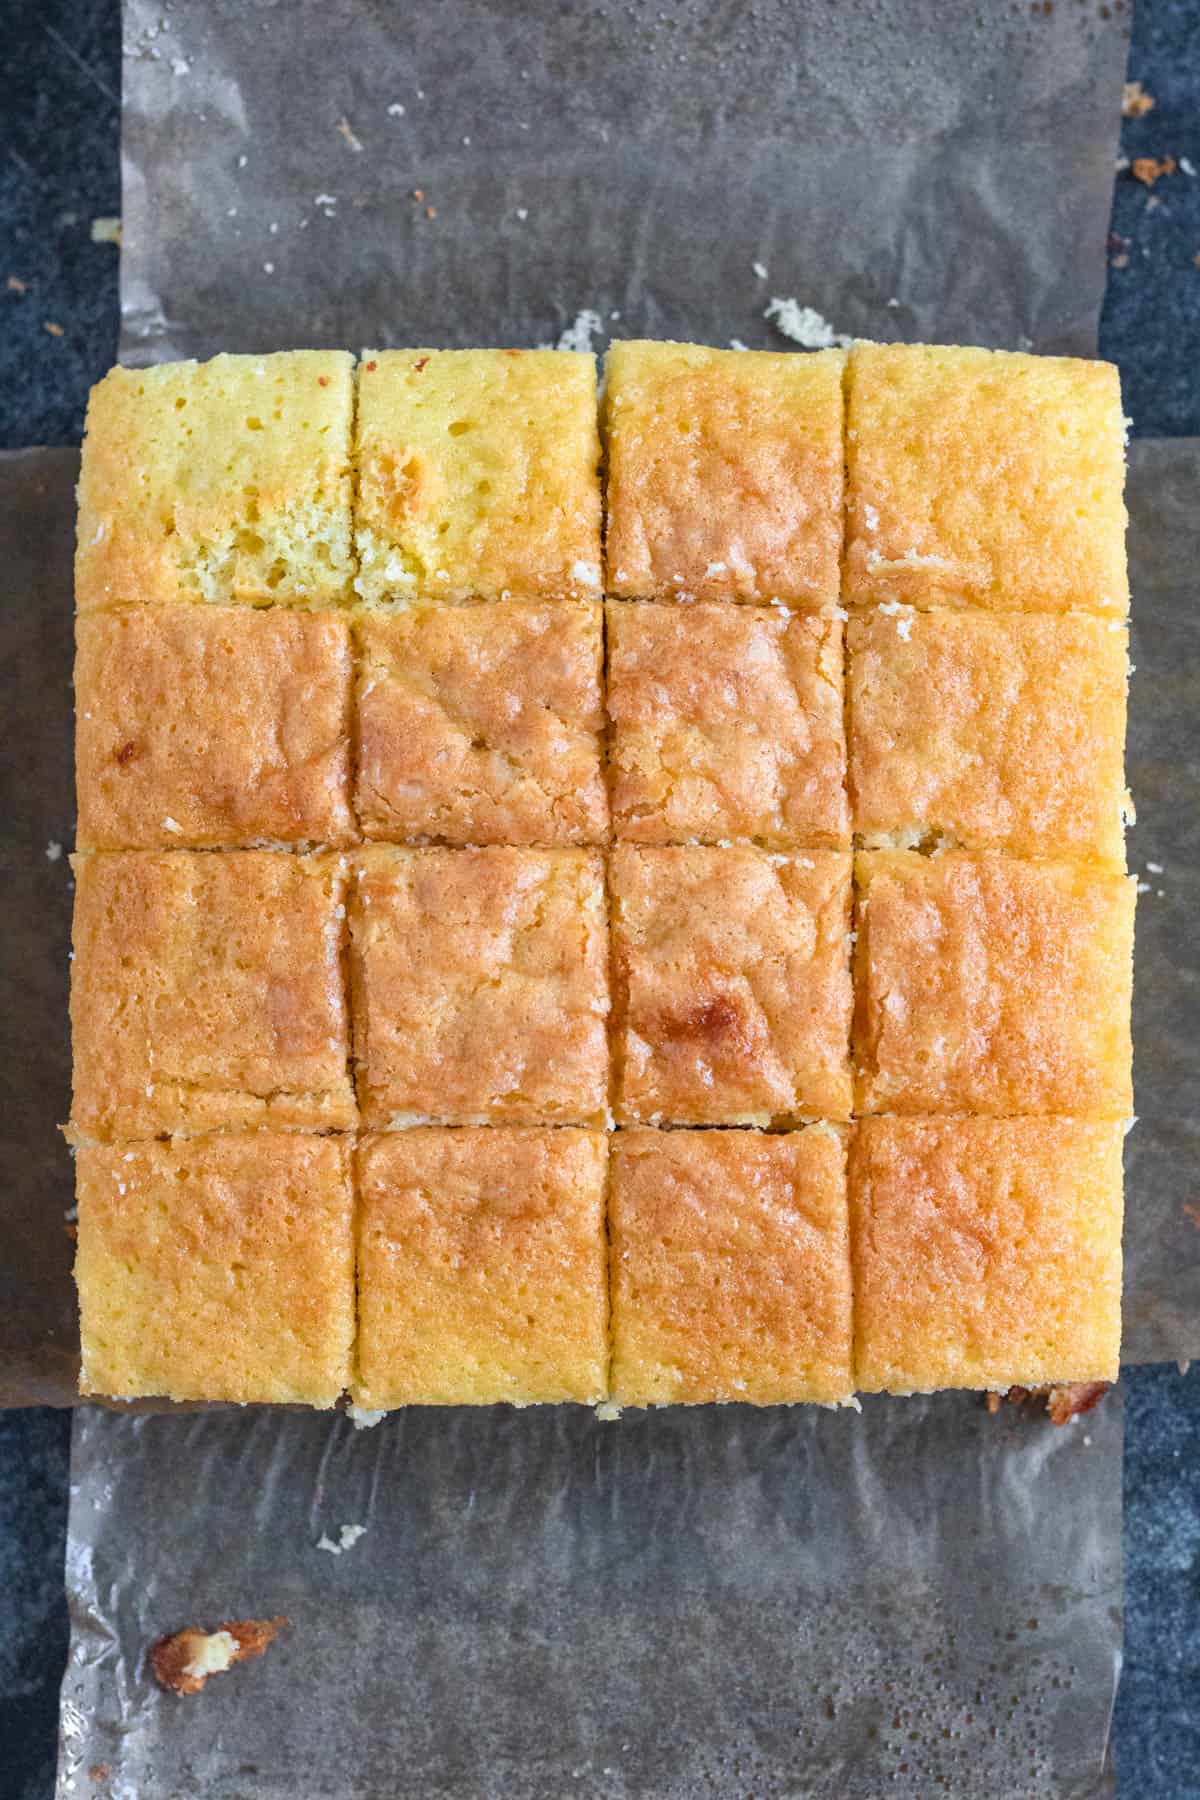 Cake cut into squares. 